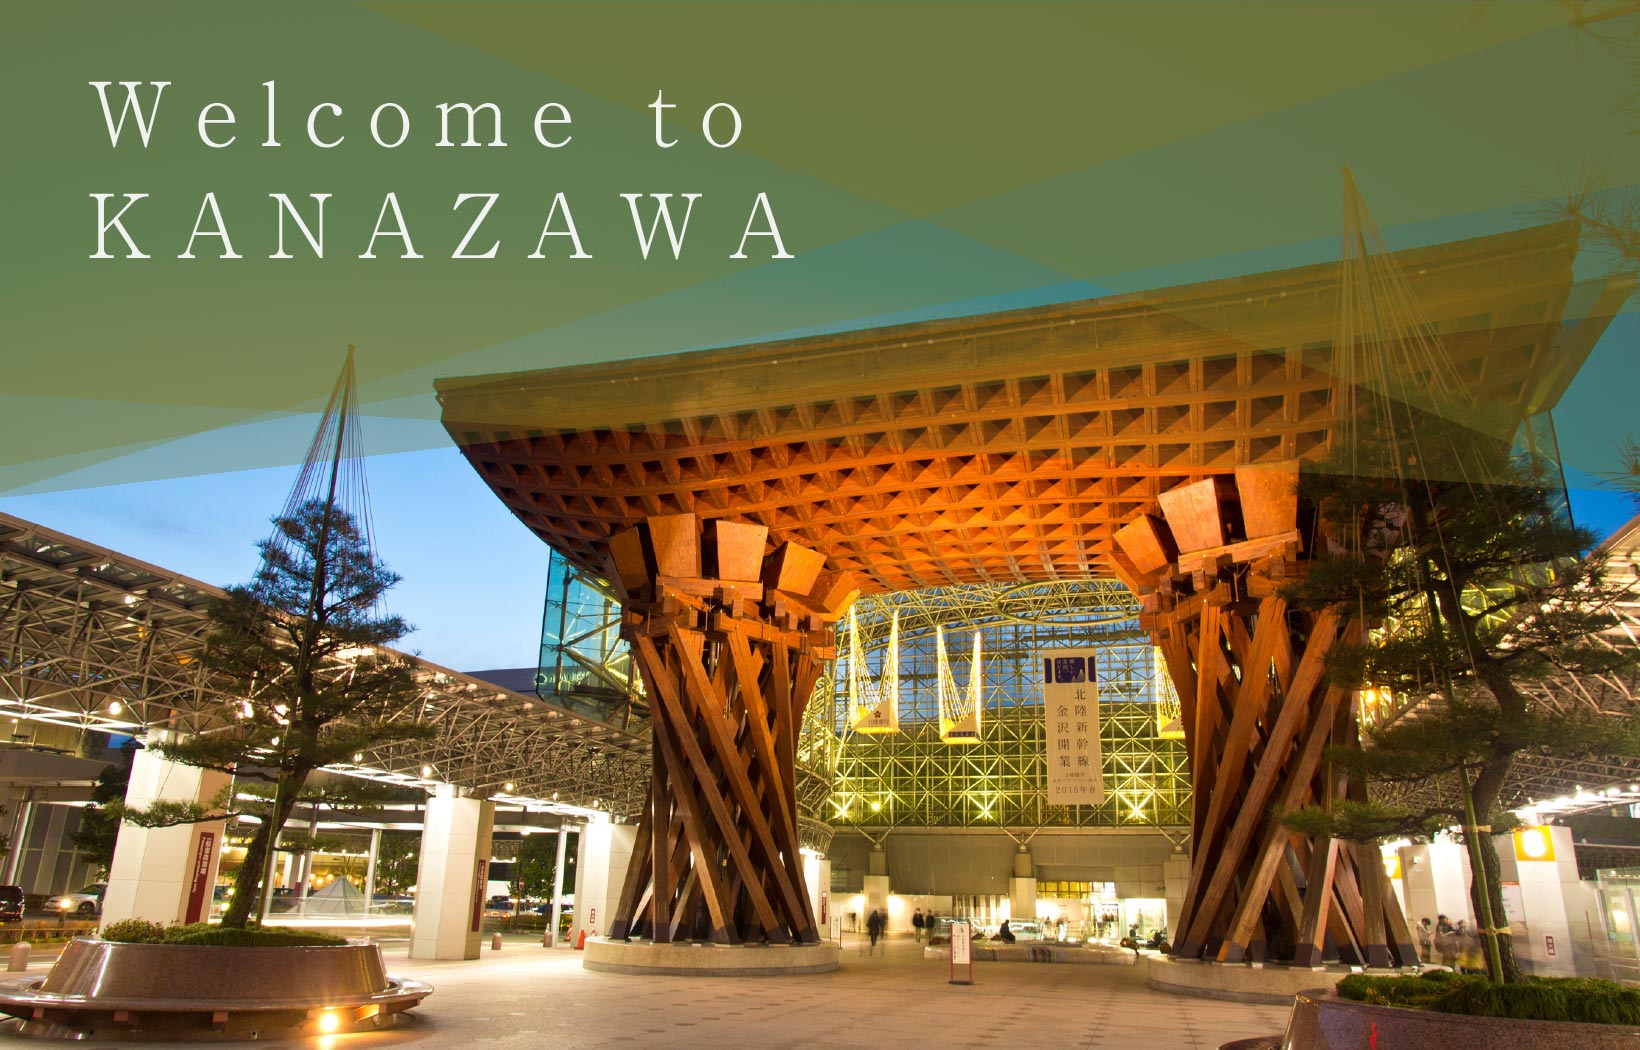 Welcome to KANAZAWA